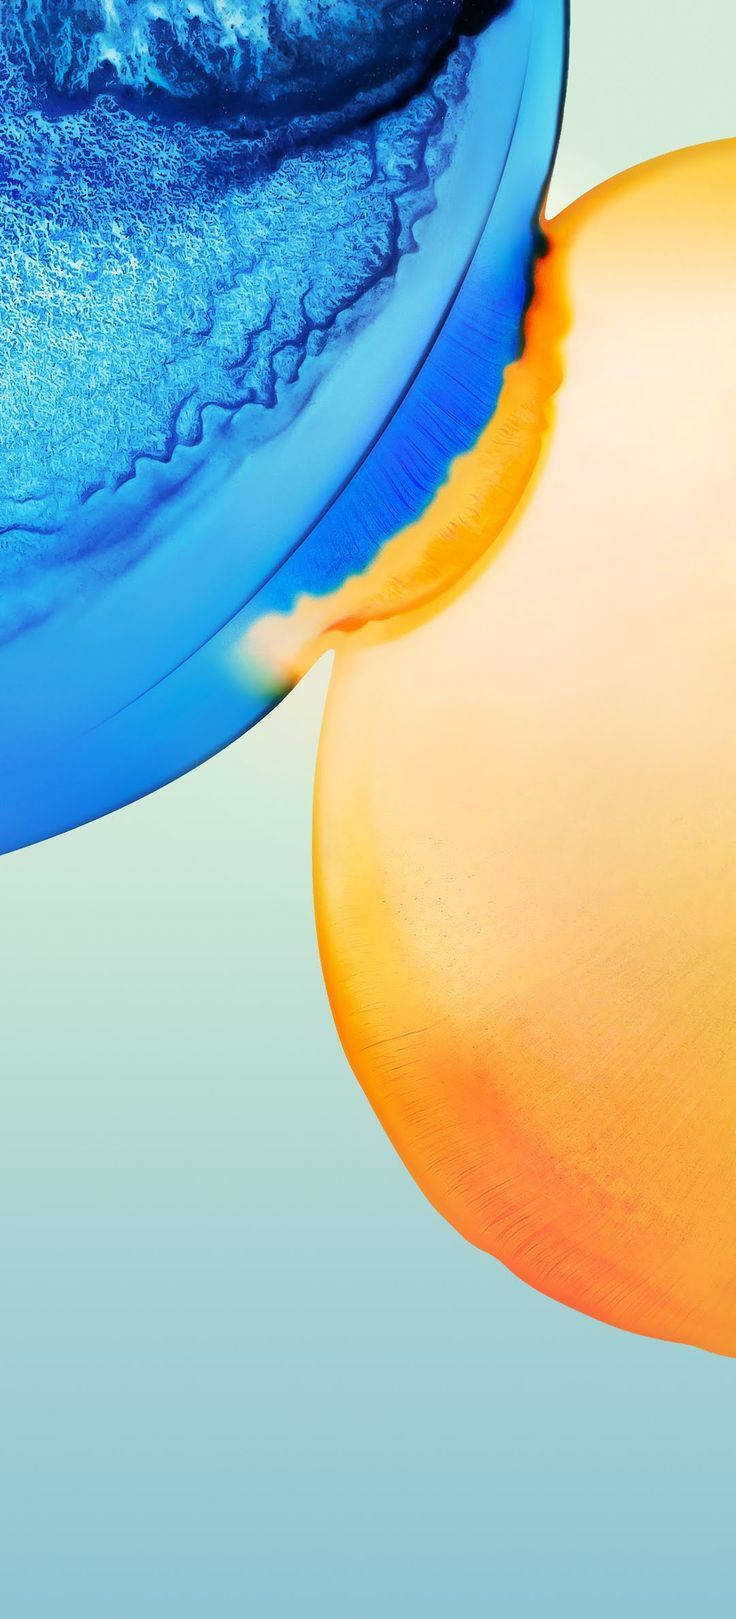 Vivo Y20 Blue And Orange Bubbles Background